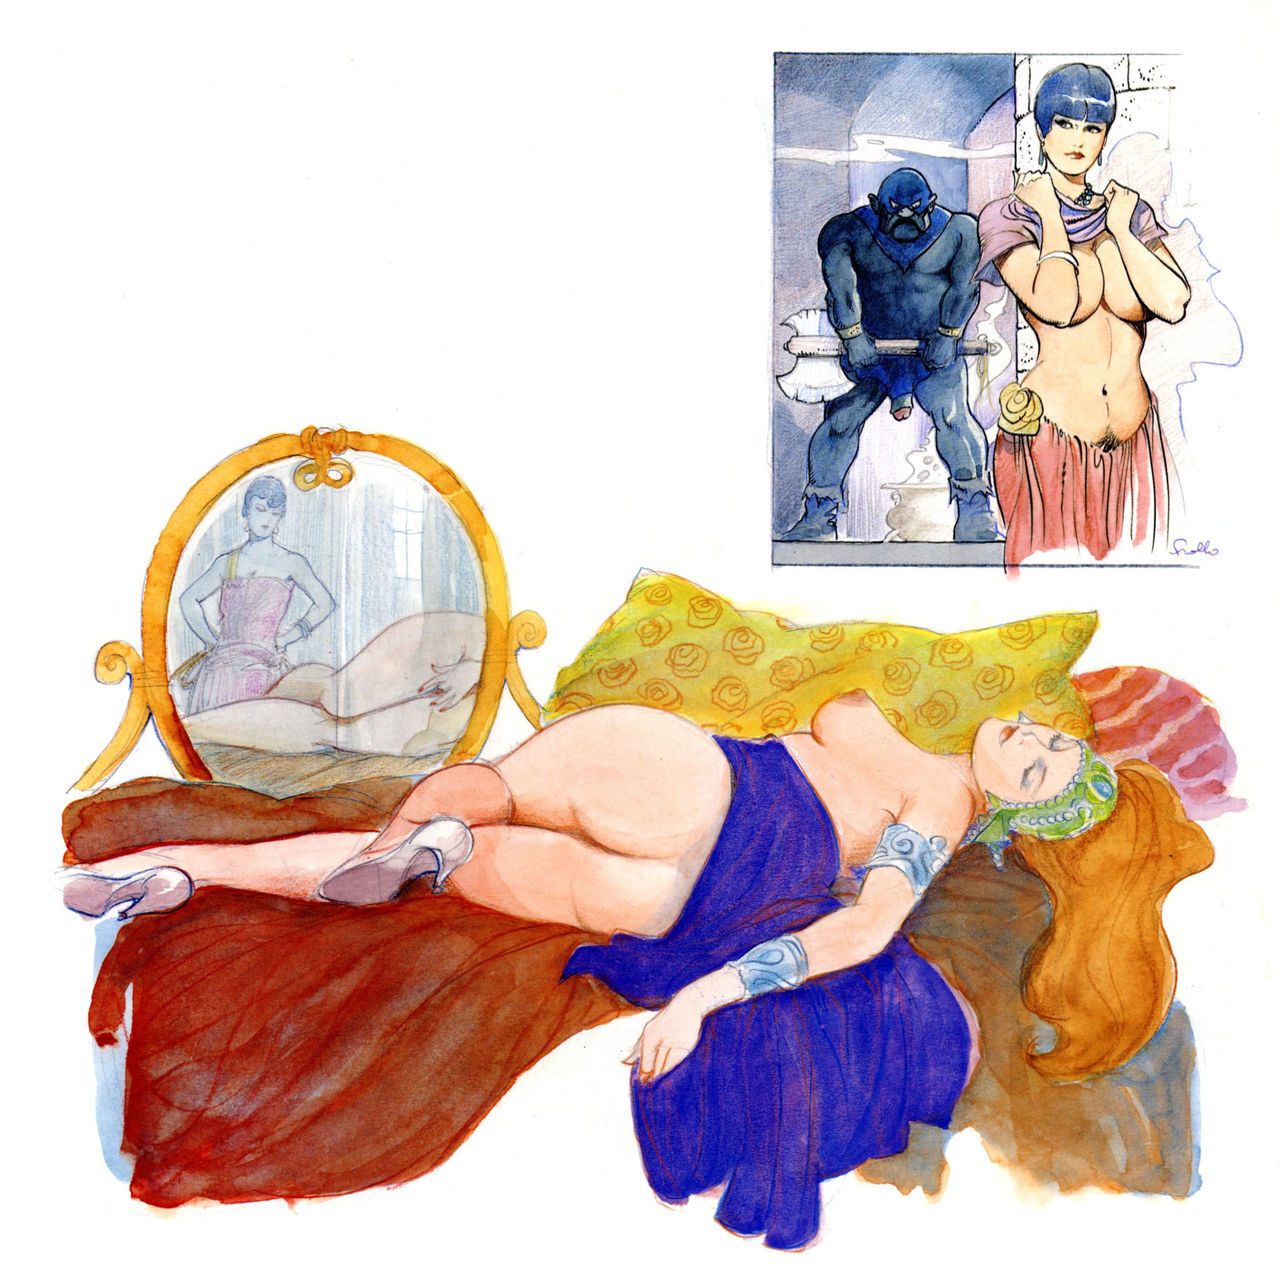 Frollo Glamour book Unpublished colour works (EN) (IT) (FR) - part 5